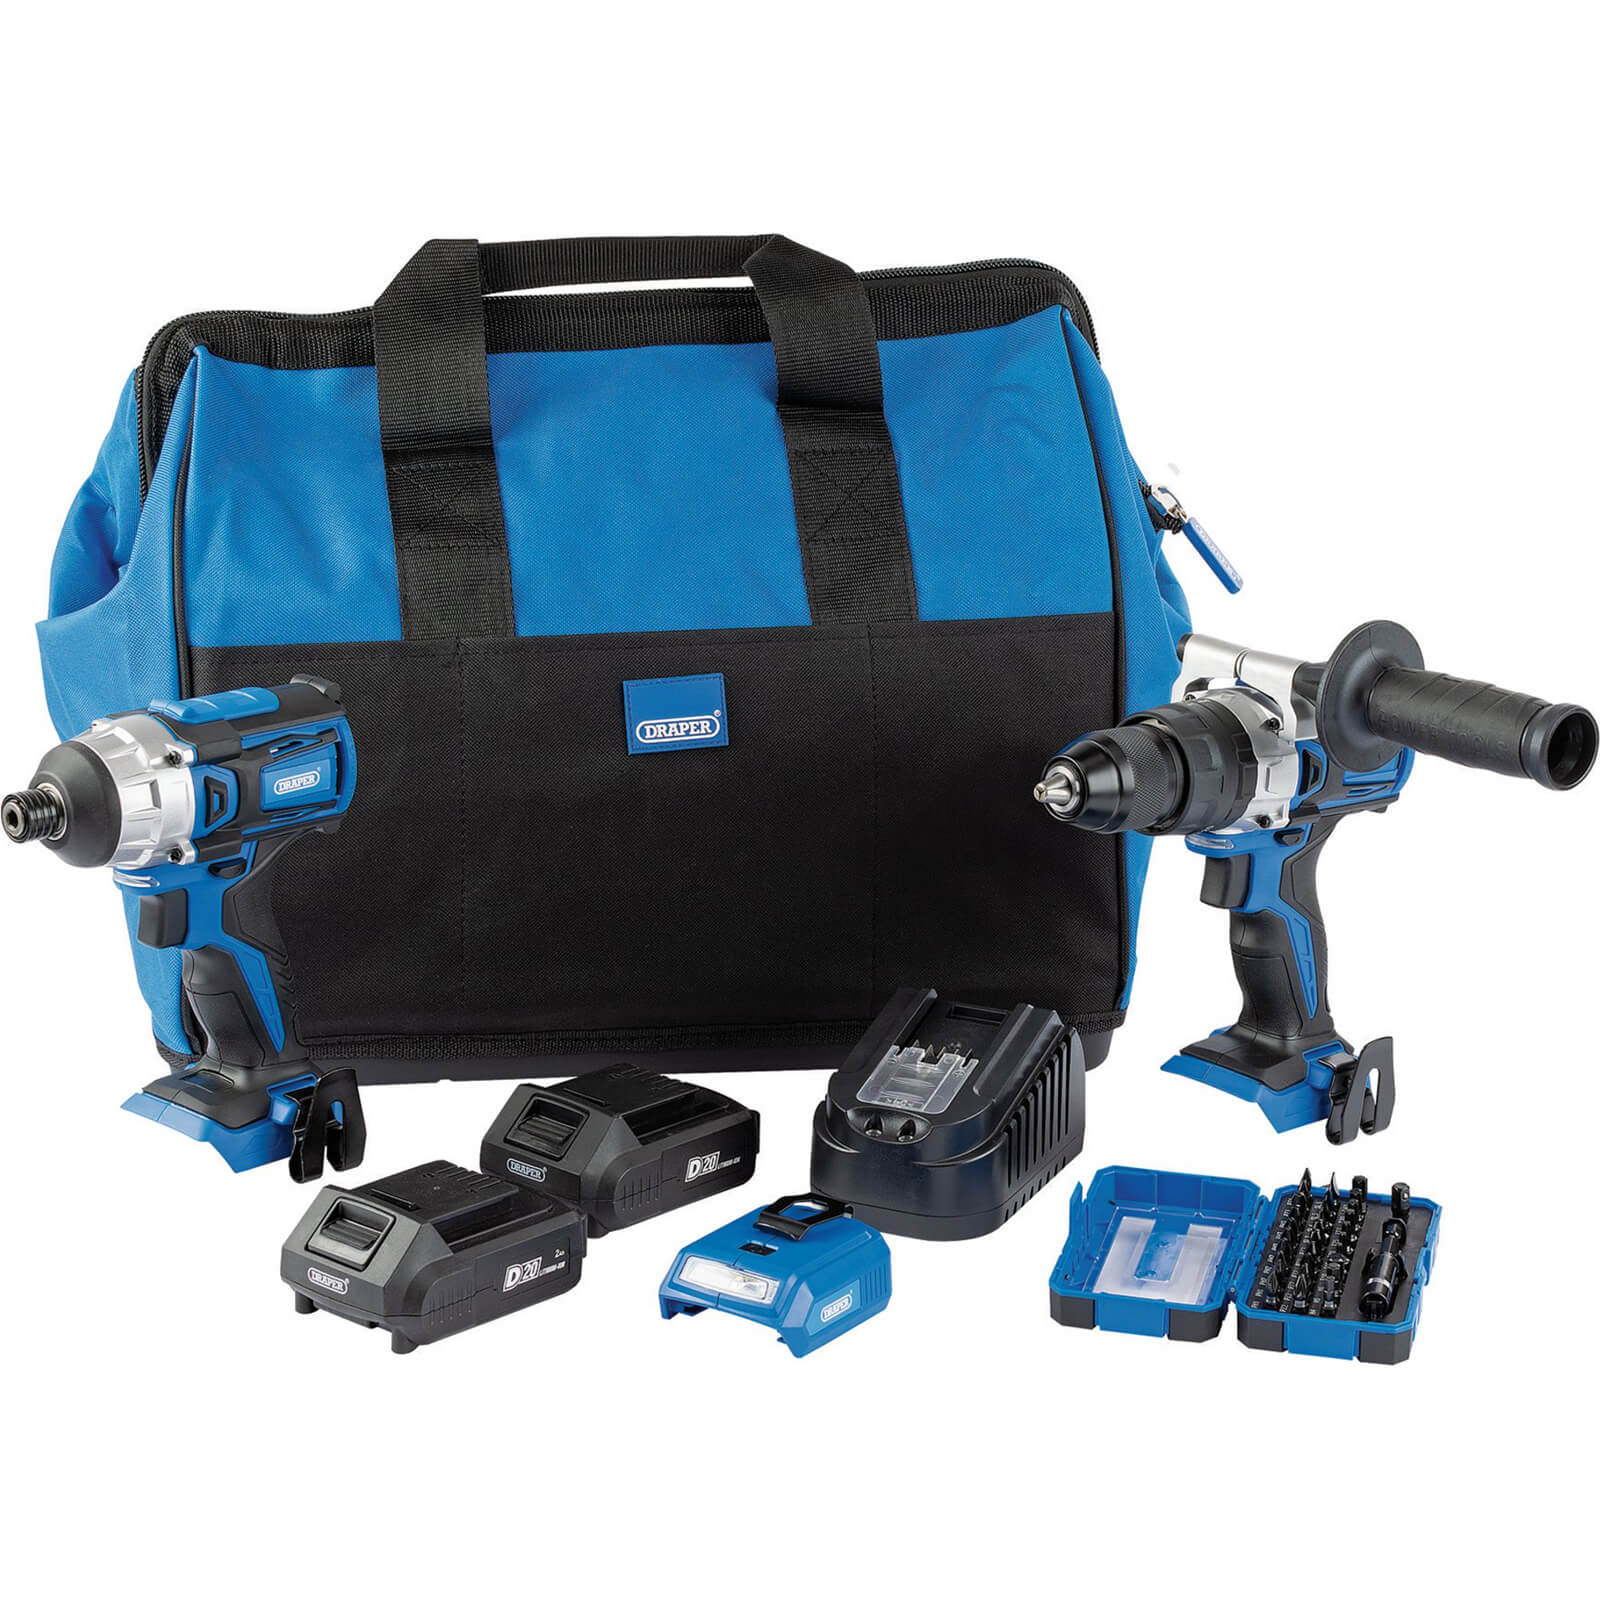 Draper 4 Piece 20v D20 Cordless Fix N Go Power Tool Kit 2 x 2ah Li-ion Charger Bag & Accessories